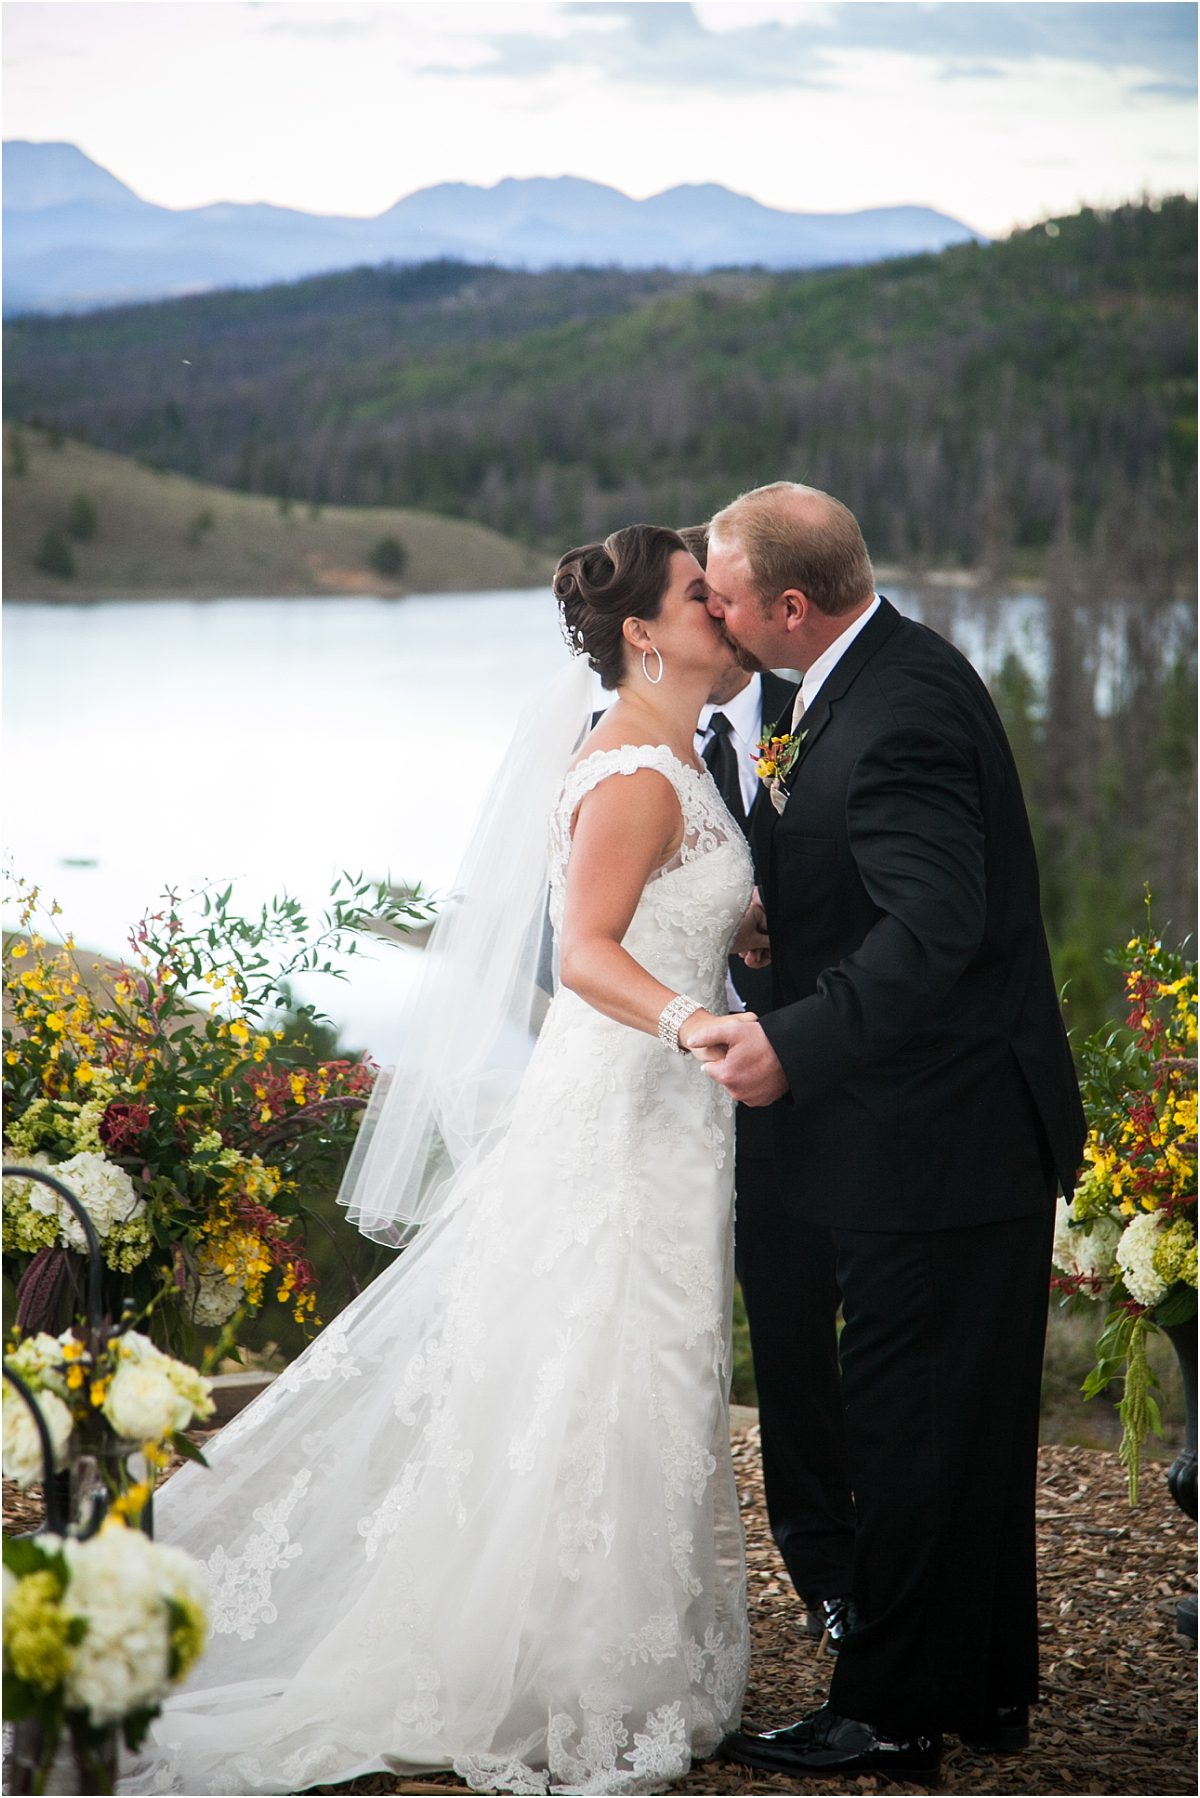 first kiss, bride and groom, ceremony, woodsie outdoor mountain ceremony site,C Lazy U Ranch, Granby, Colorado, Rustic Ranch Wedding, Colorado Wedding Planner, Mountain Wedding Photographer